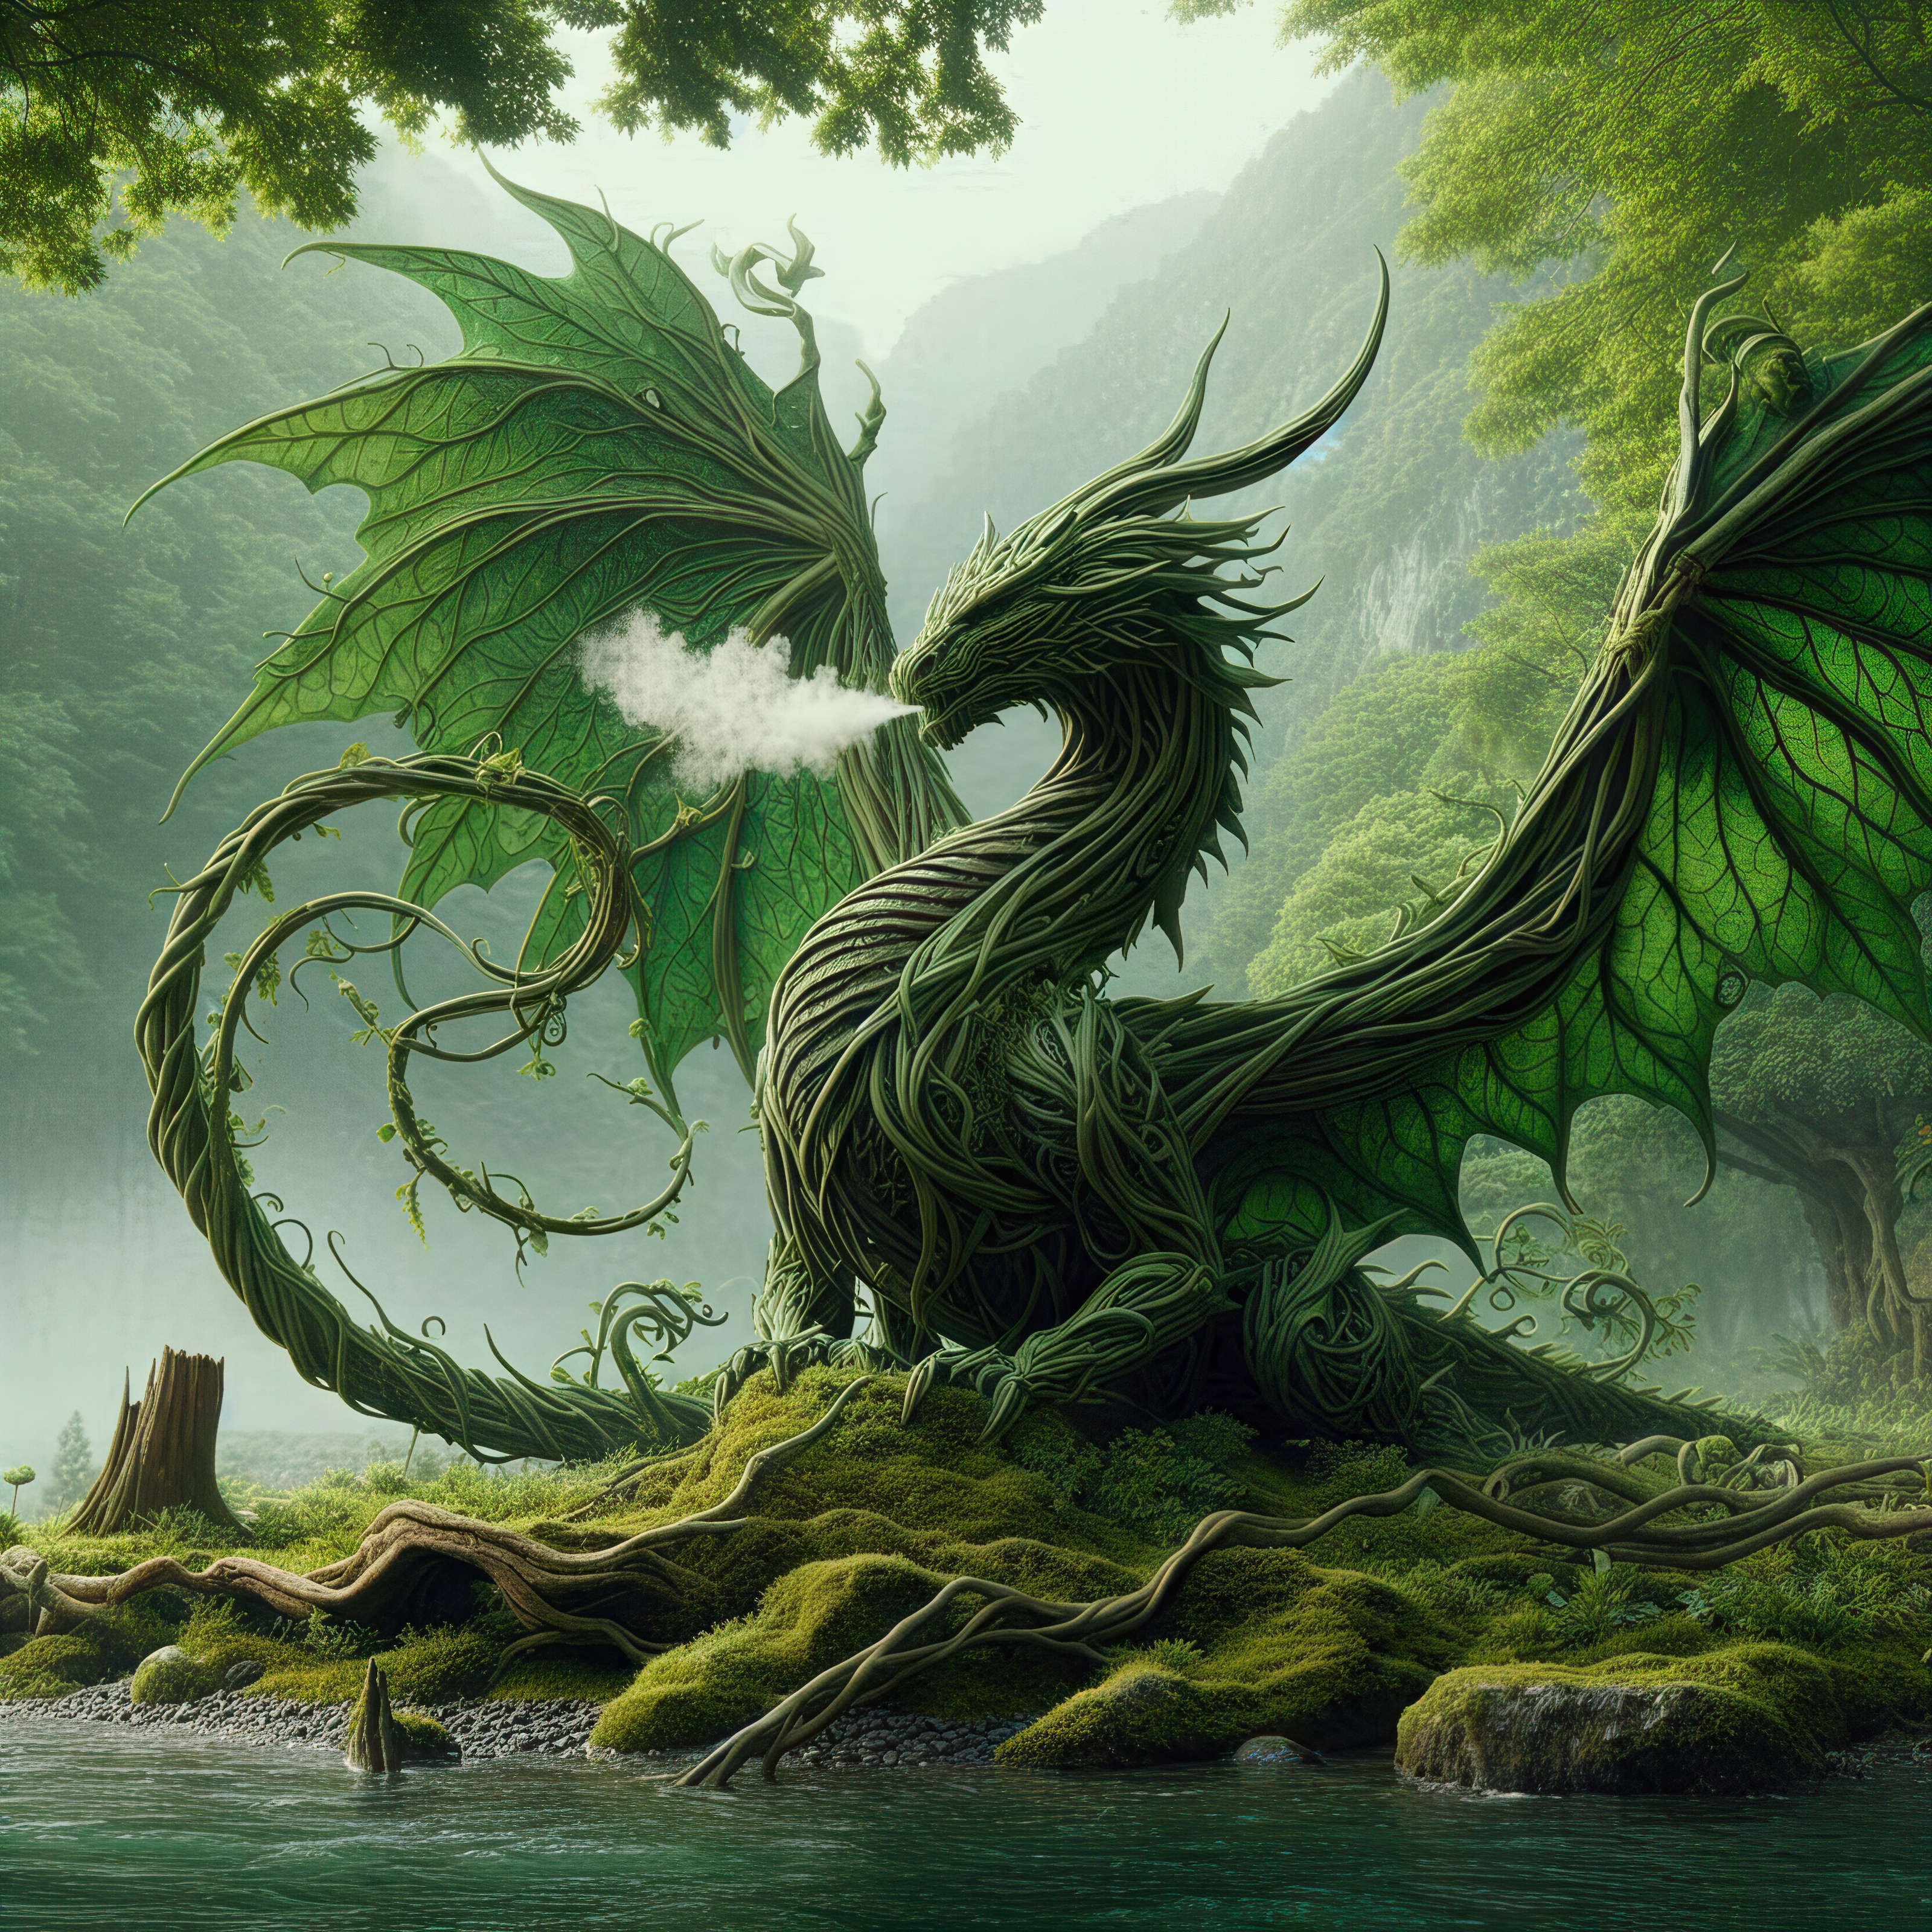 General 3200x3200 AI art fantasy art dragon green leaves vines forest mist